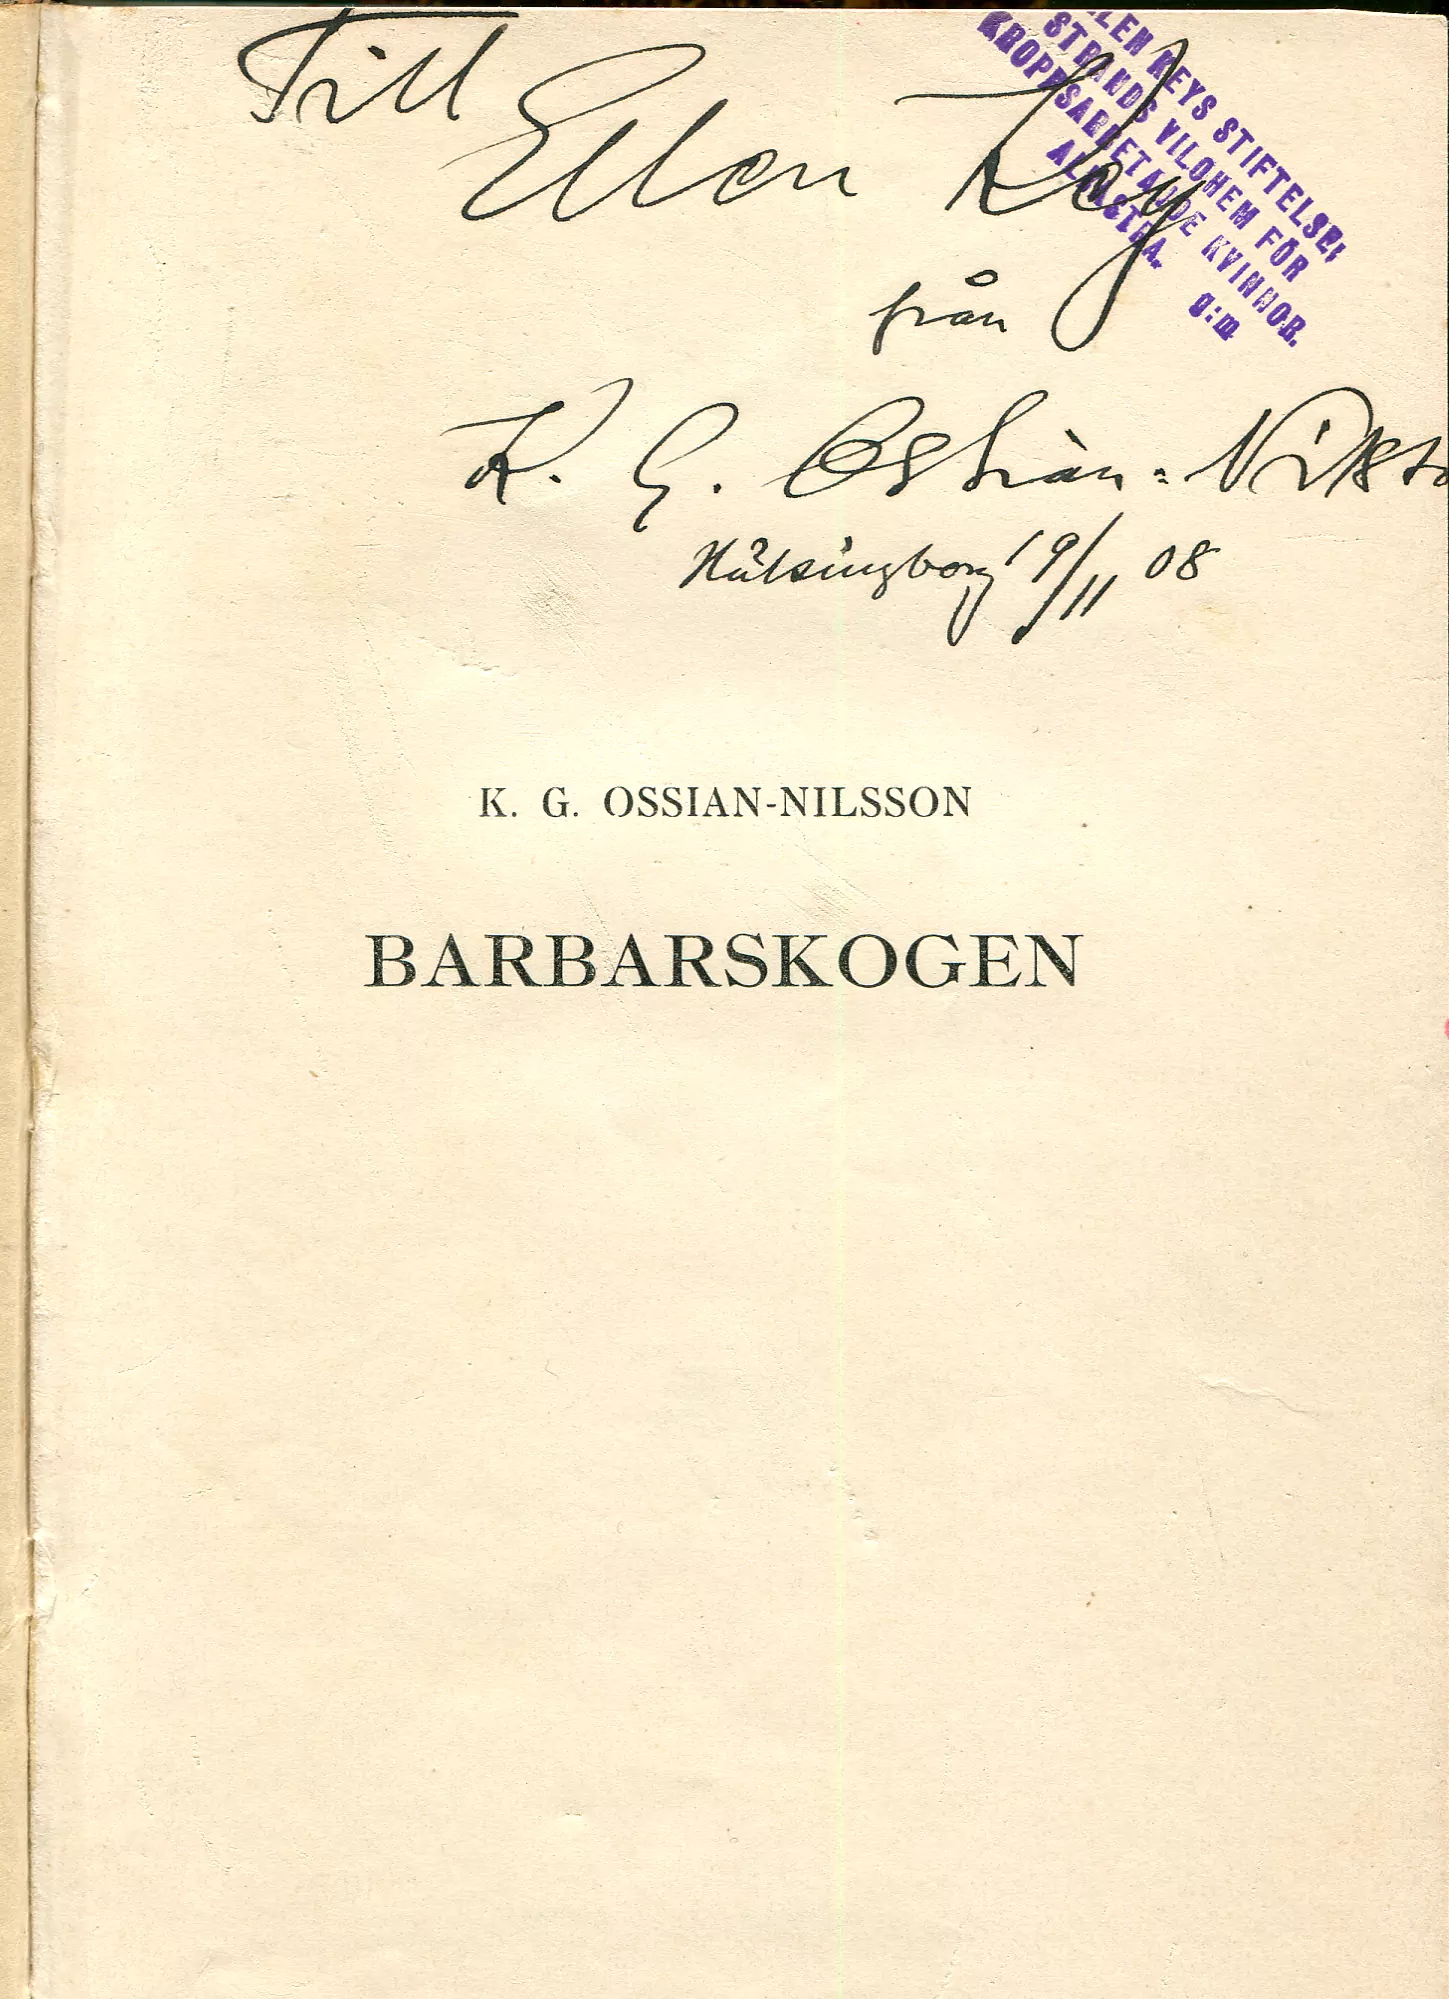 Barbarskogen , Stockholm 1908